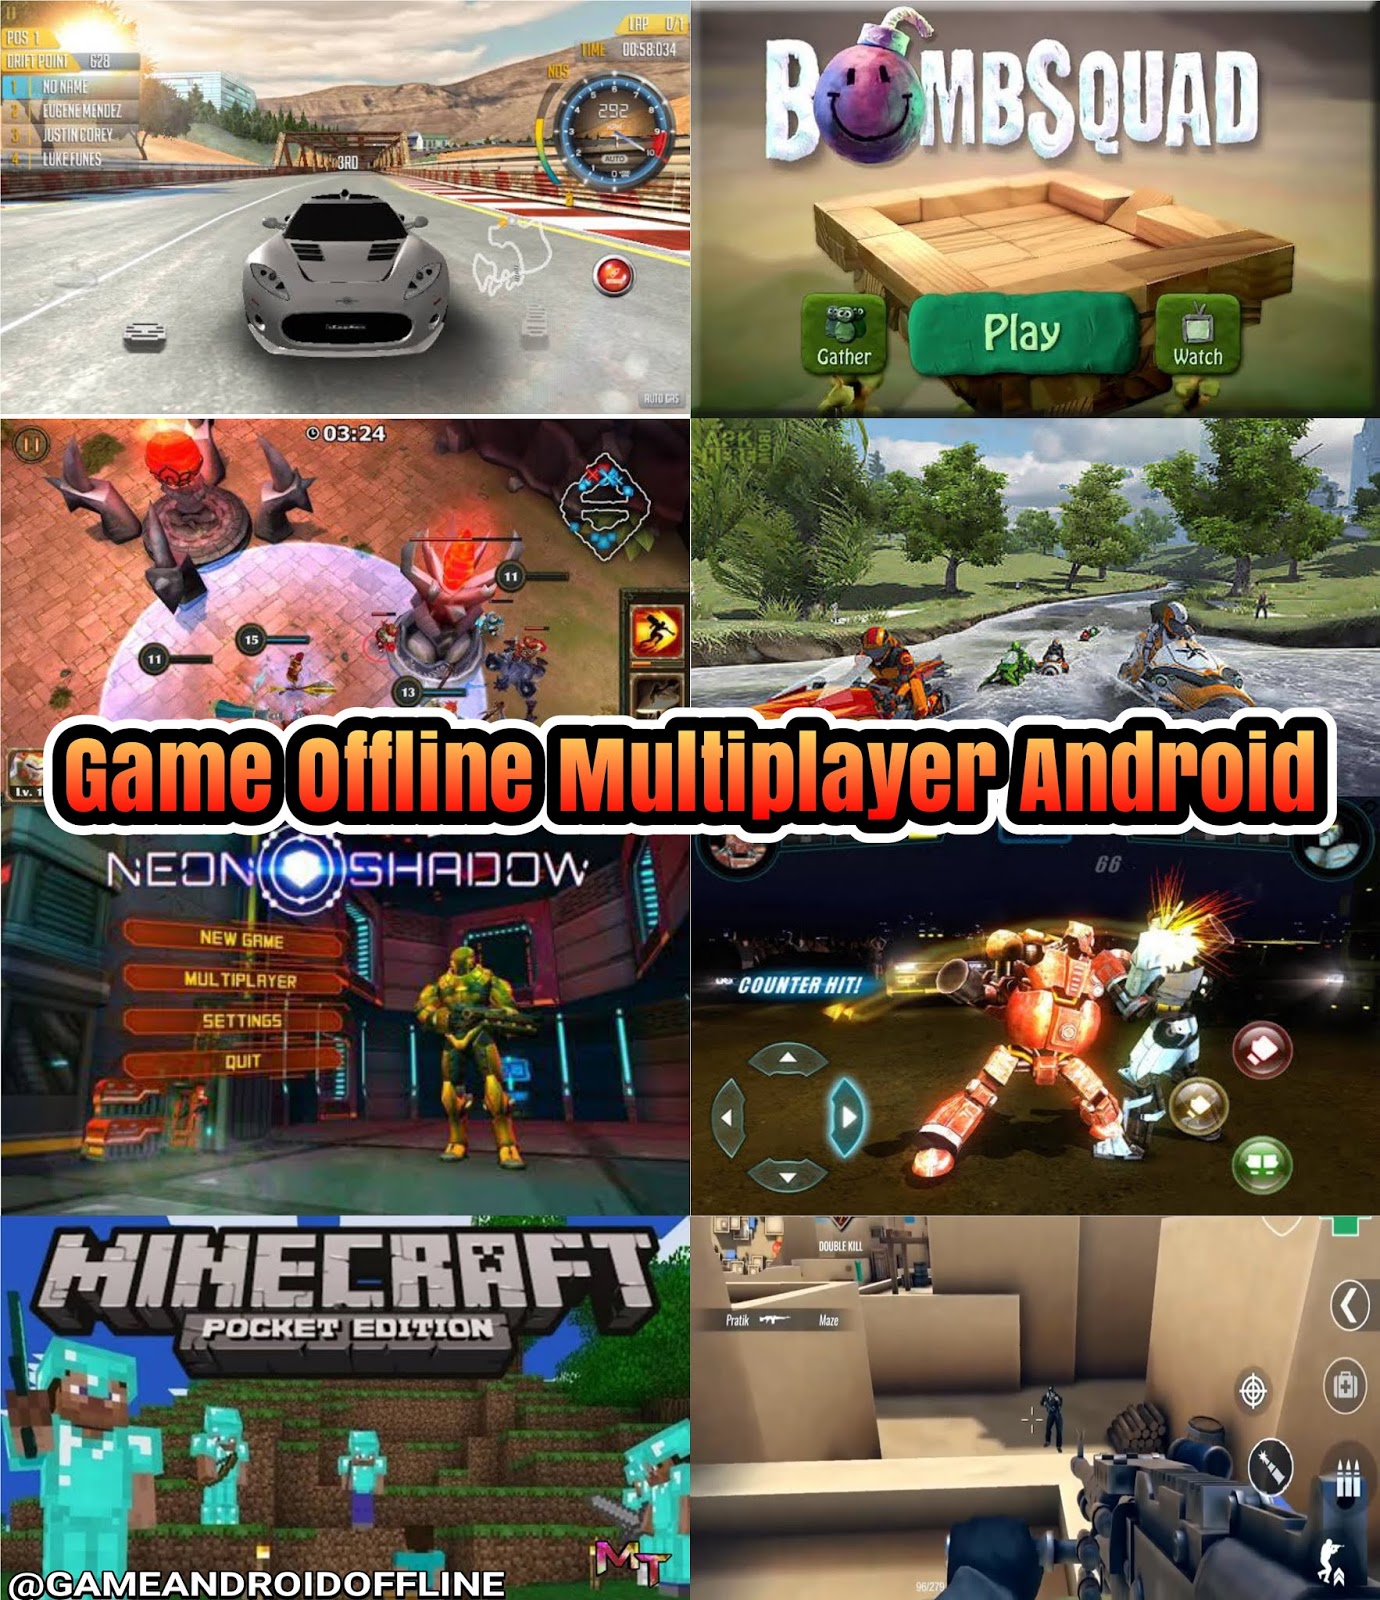 Offline multiplayer